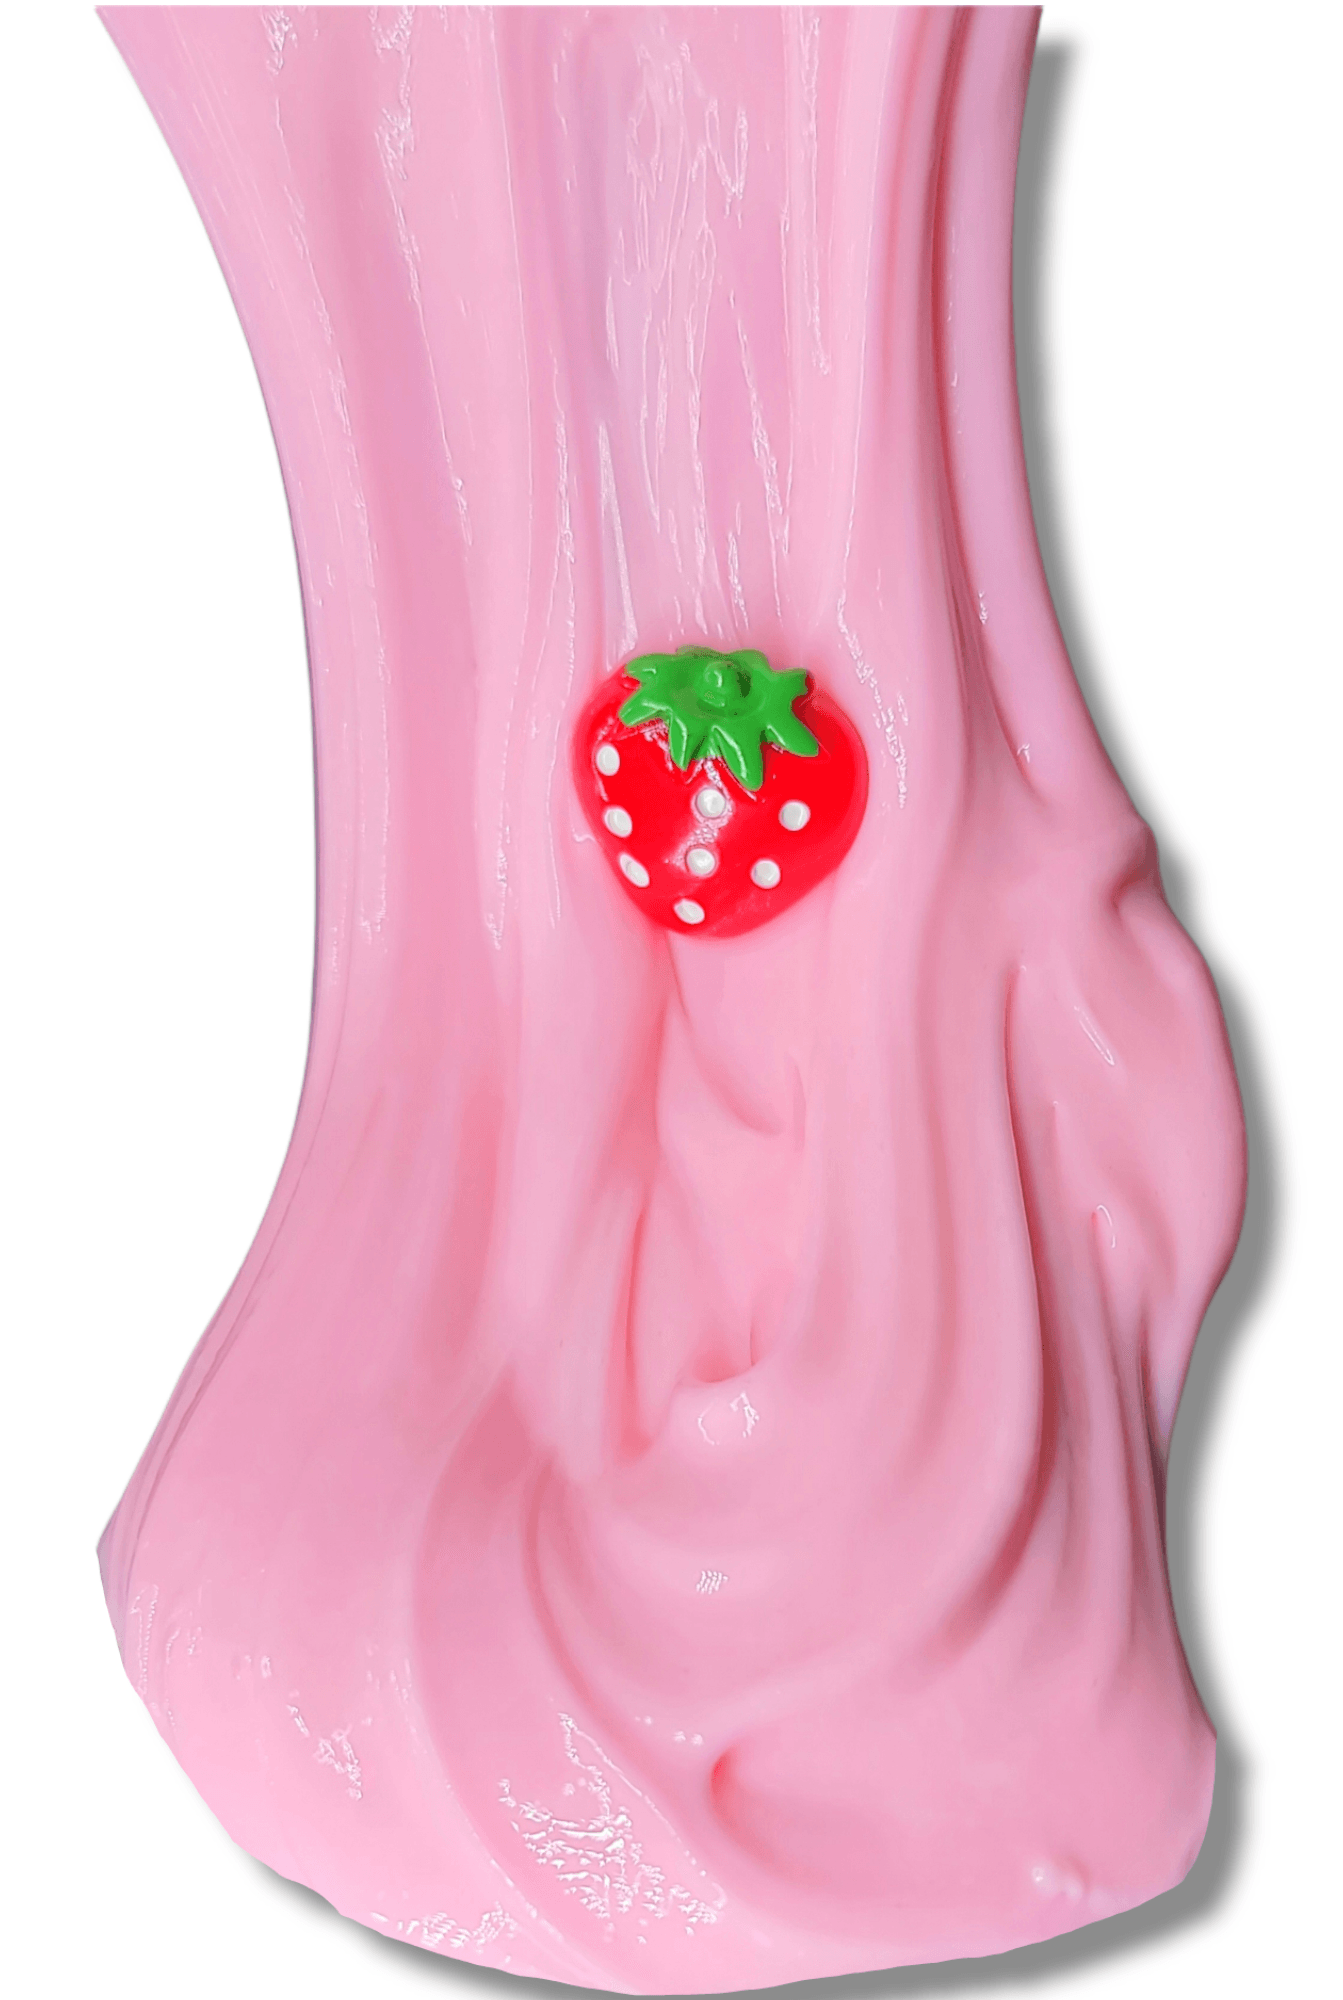 Strawberry Milk Handmade Thick Slime 32oz Slime by Hoshimi Slimes LLC | Hoshimi Slimes LLC